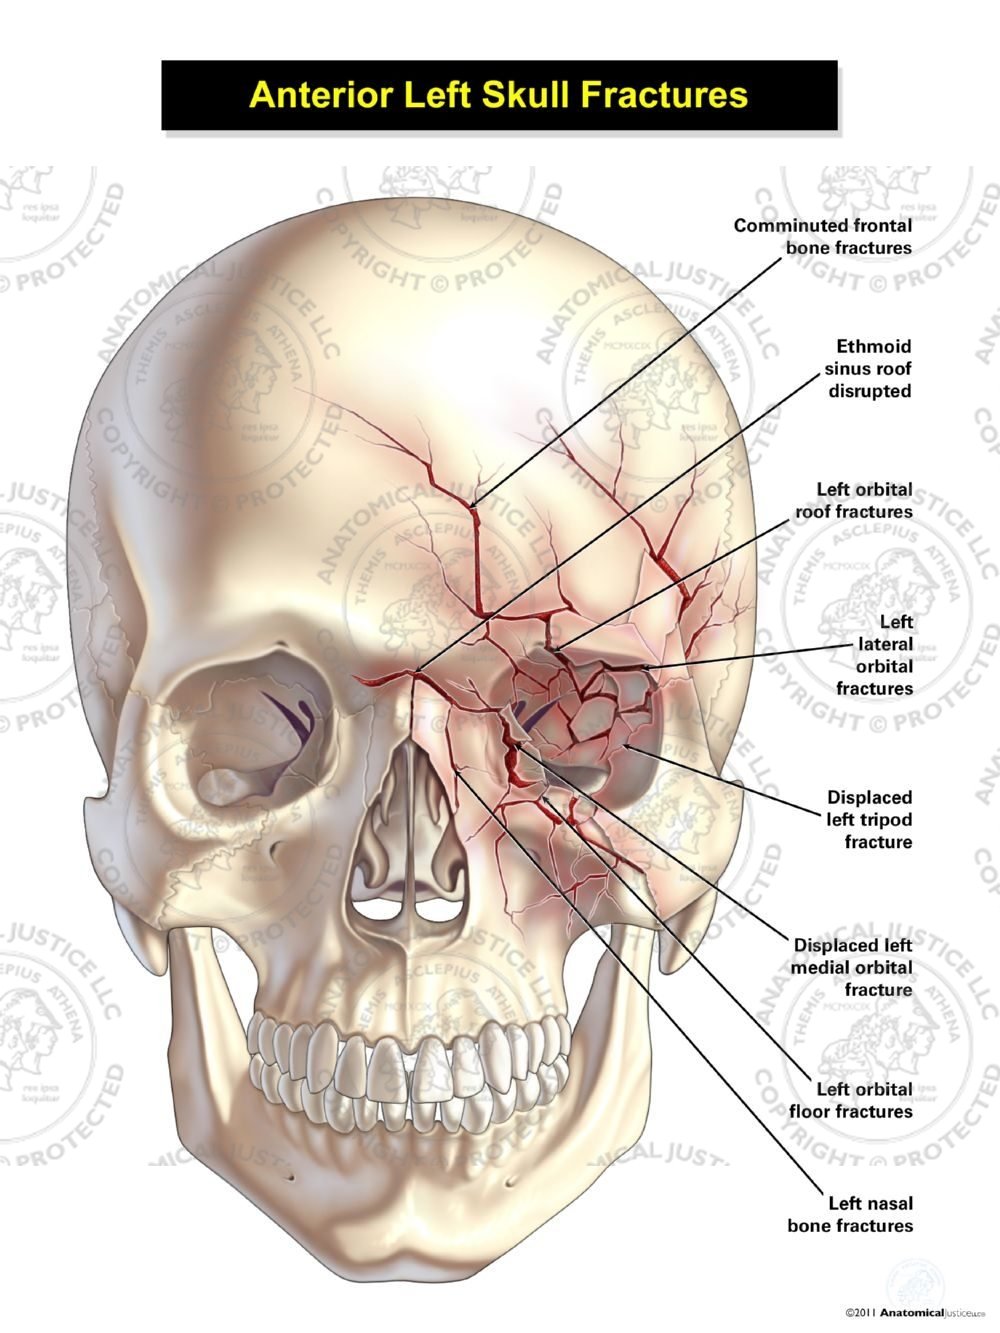 Anterior Left Skull Fractures